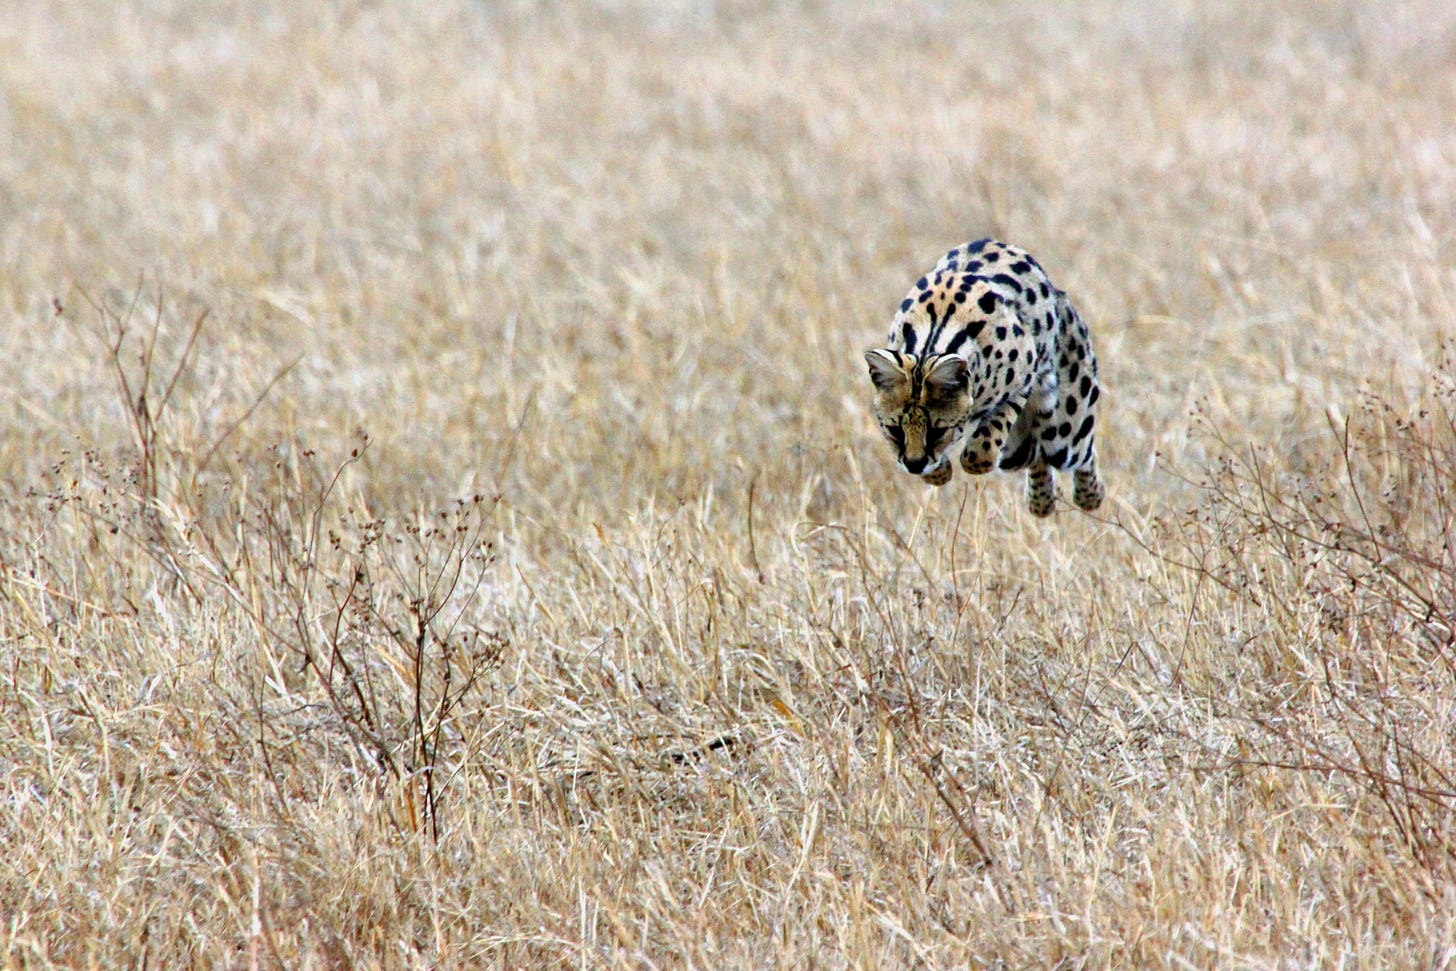 Jaguar pouncing on unseen prey in a yellow grassland.